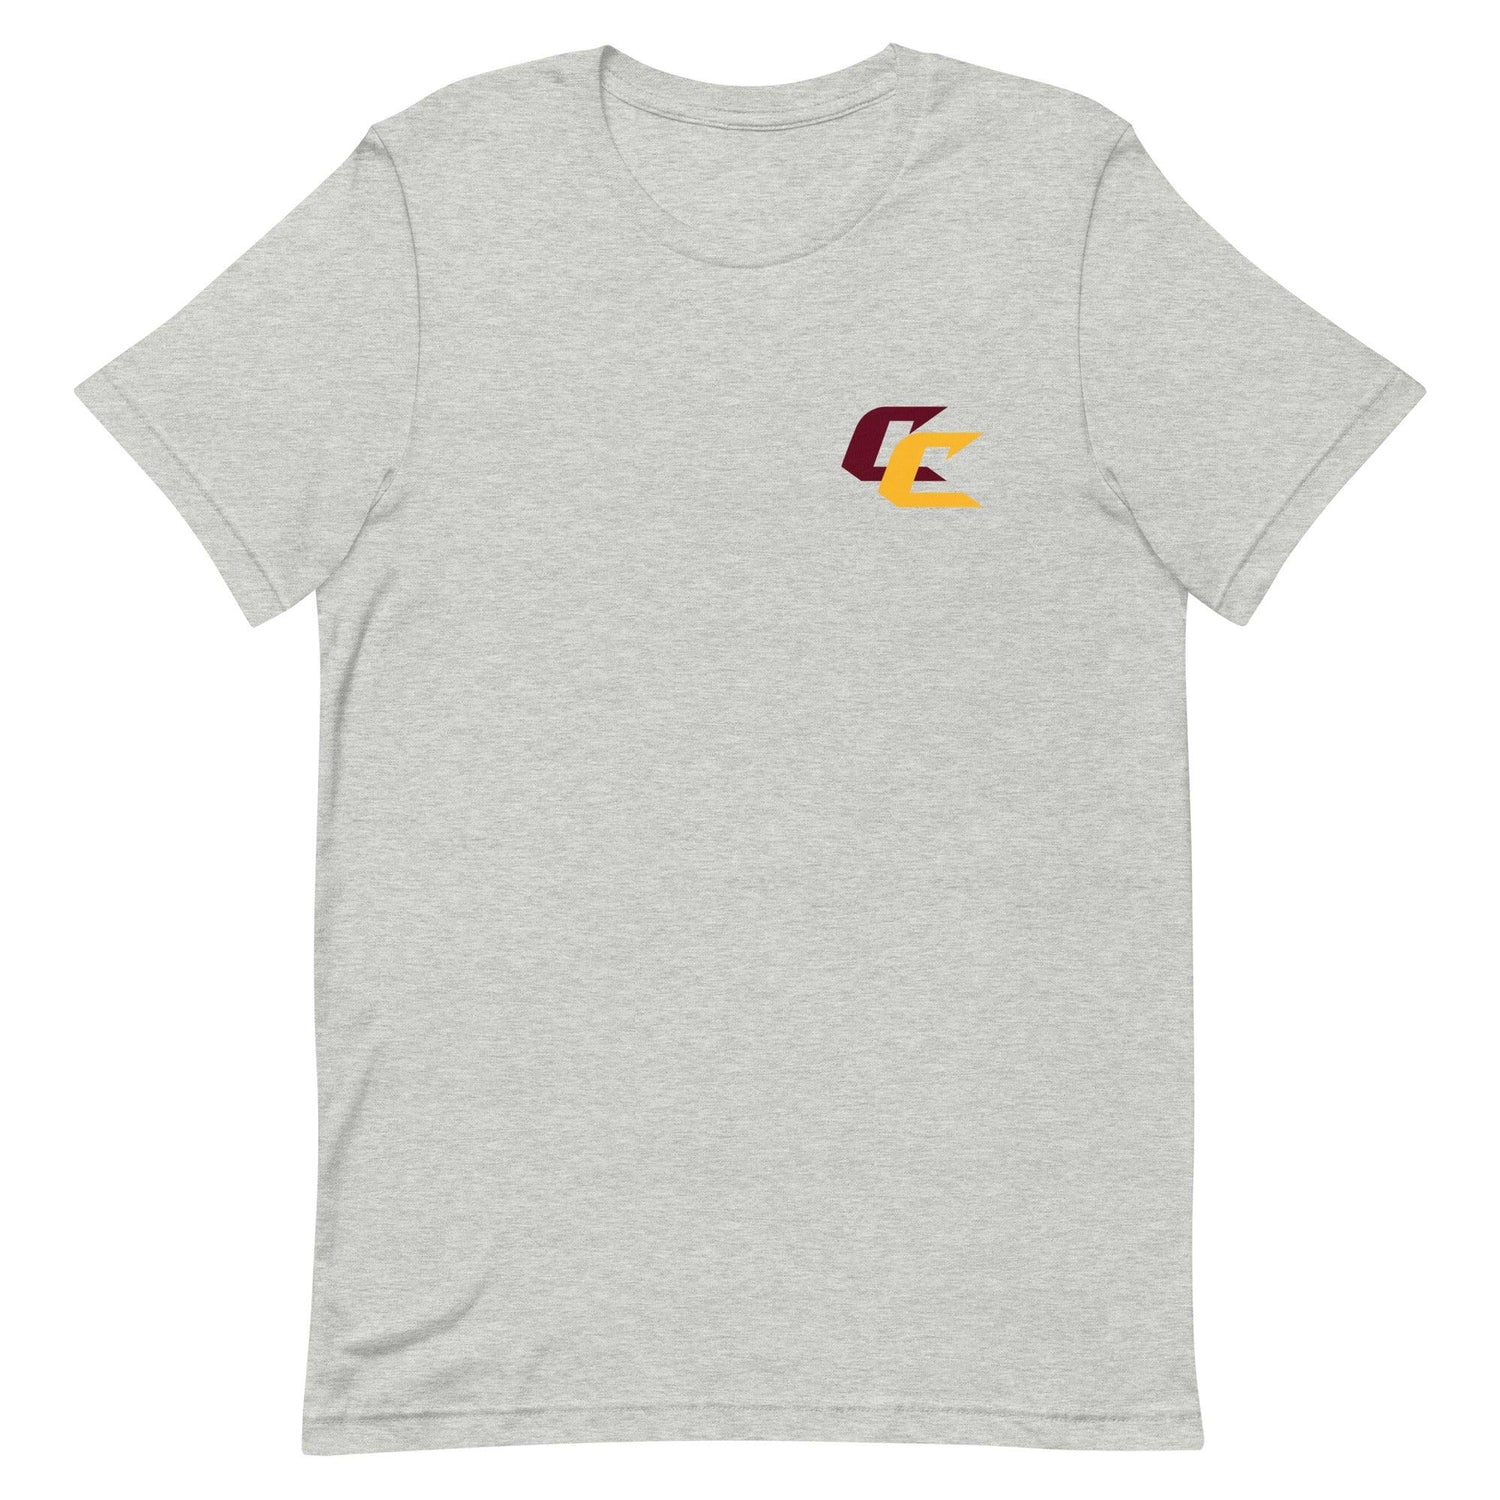 Corey Crooms "Signature" t-shirt - Fan Arch